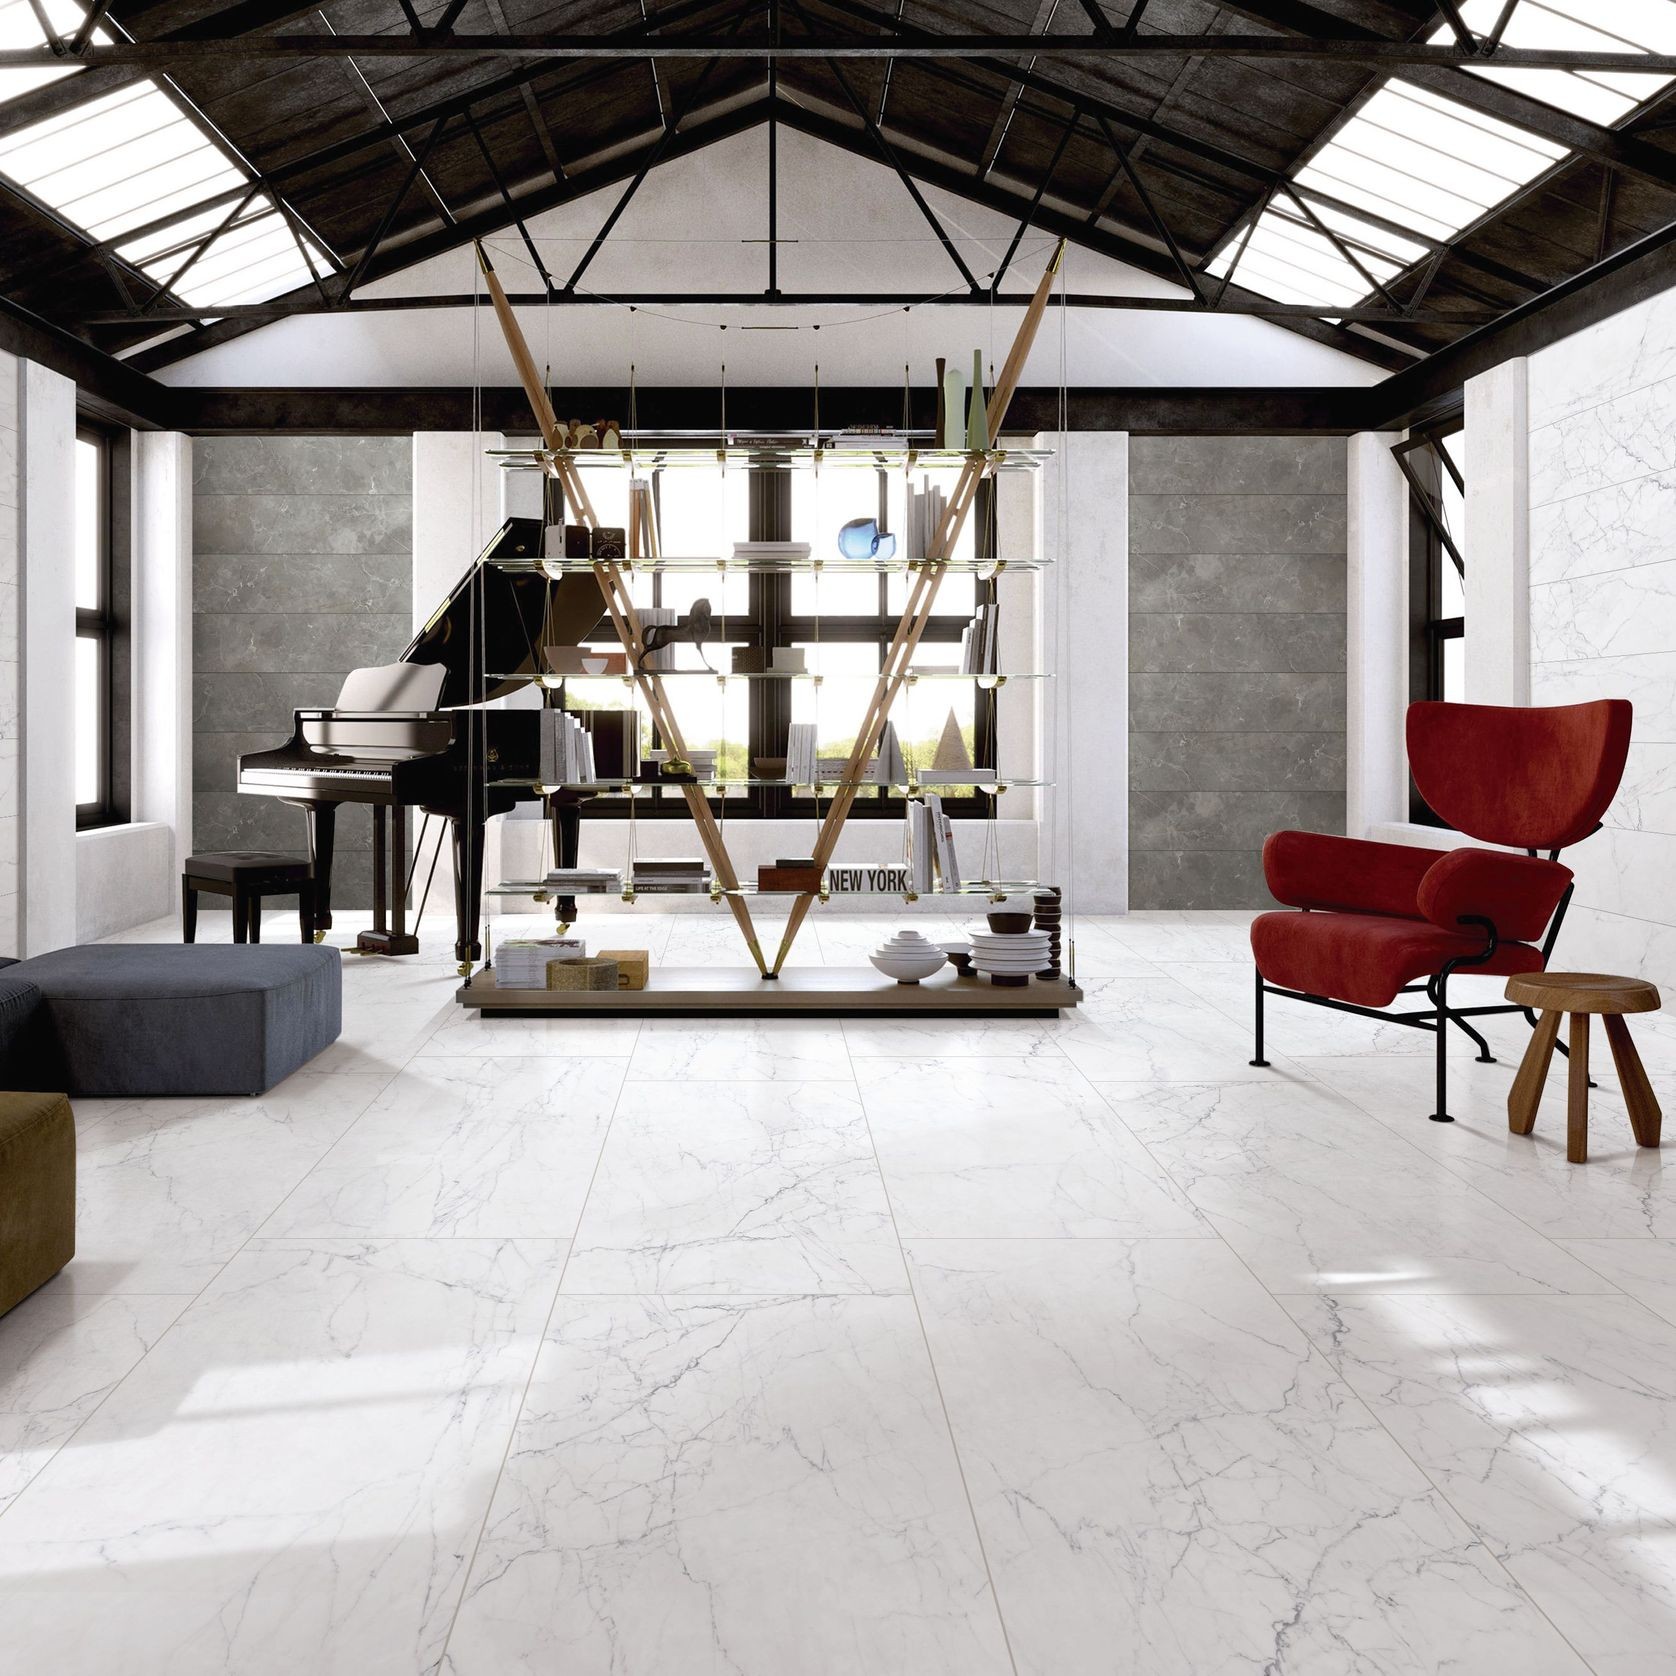 Evo Carrara & Statuario Wall & Floor Tiles gallery detail image